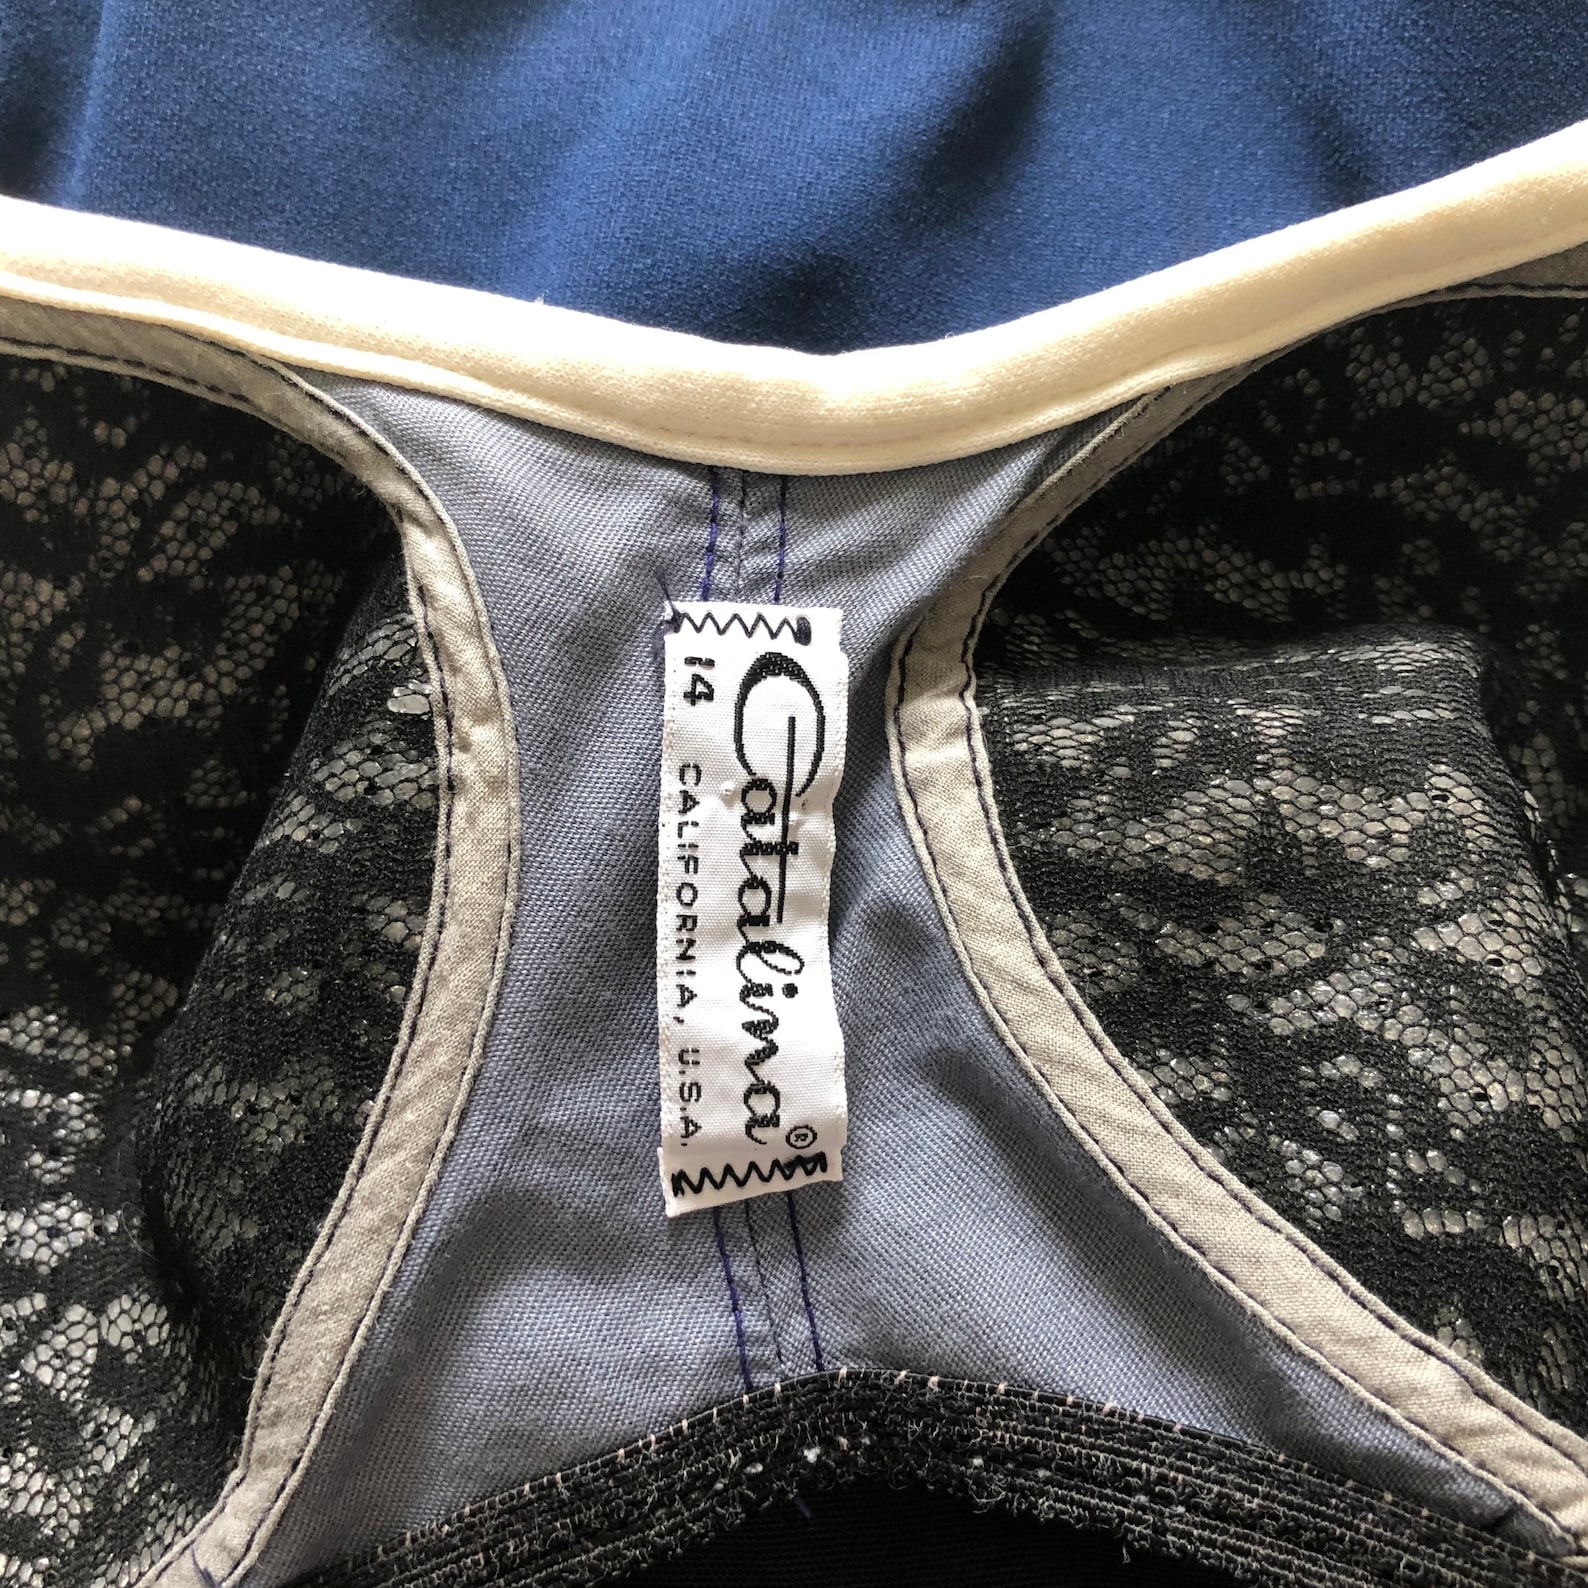 Catalina Swimwear Navy Blue One-piece Medium | Etsy